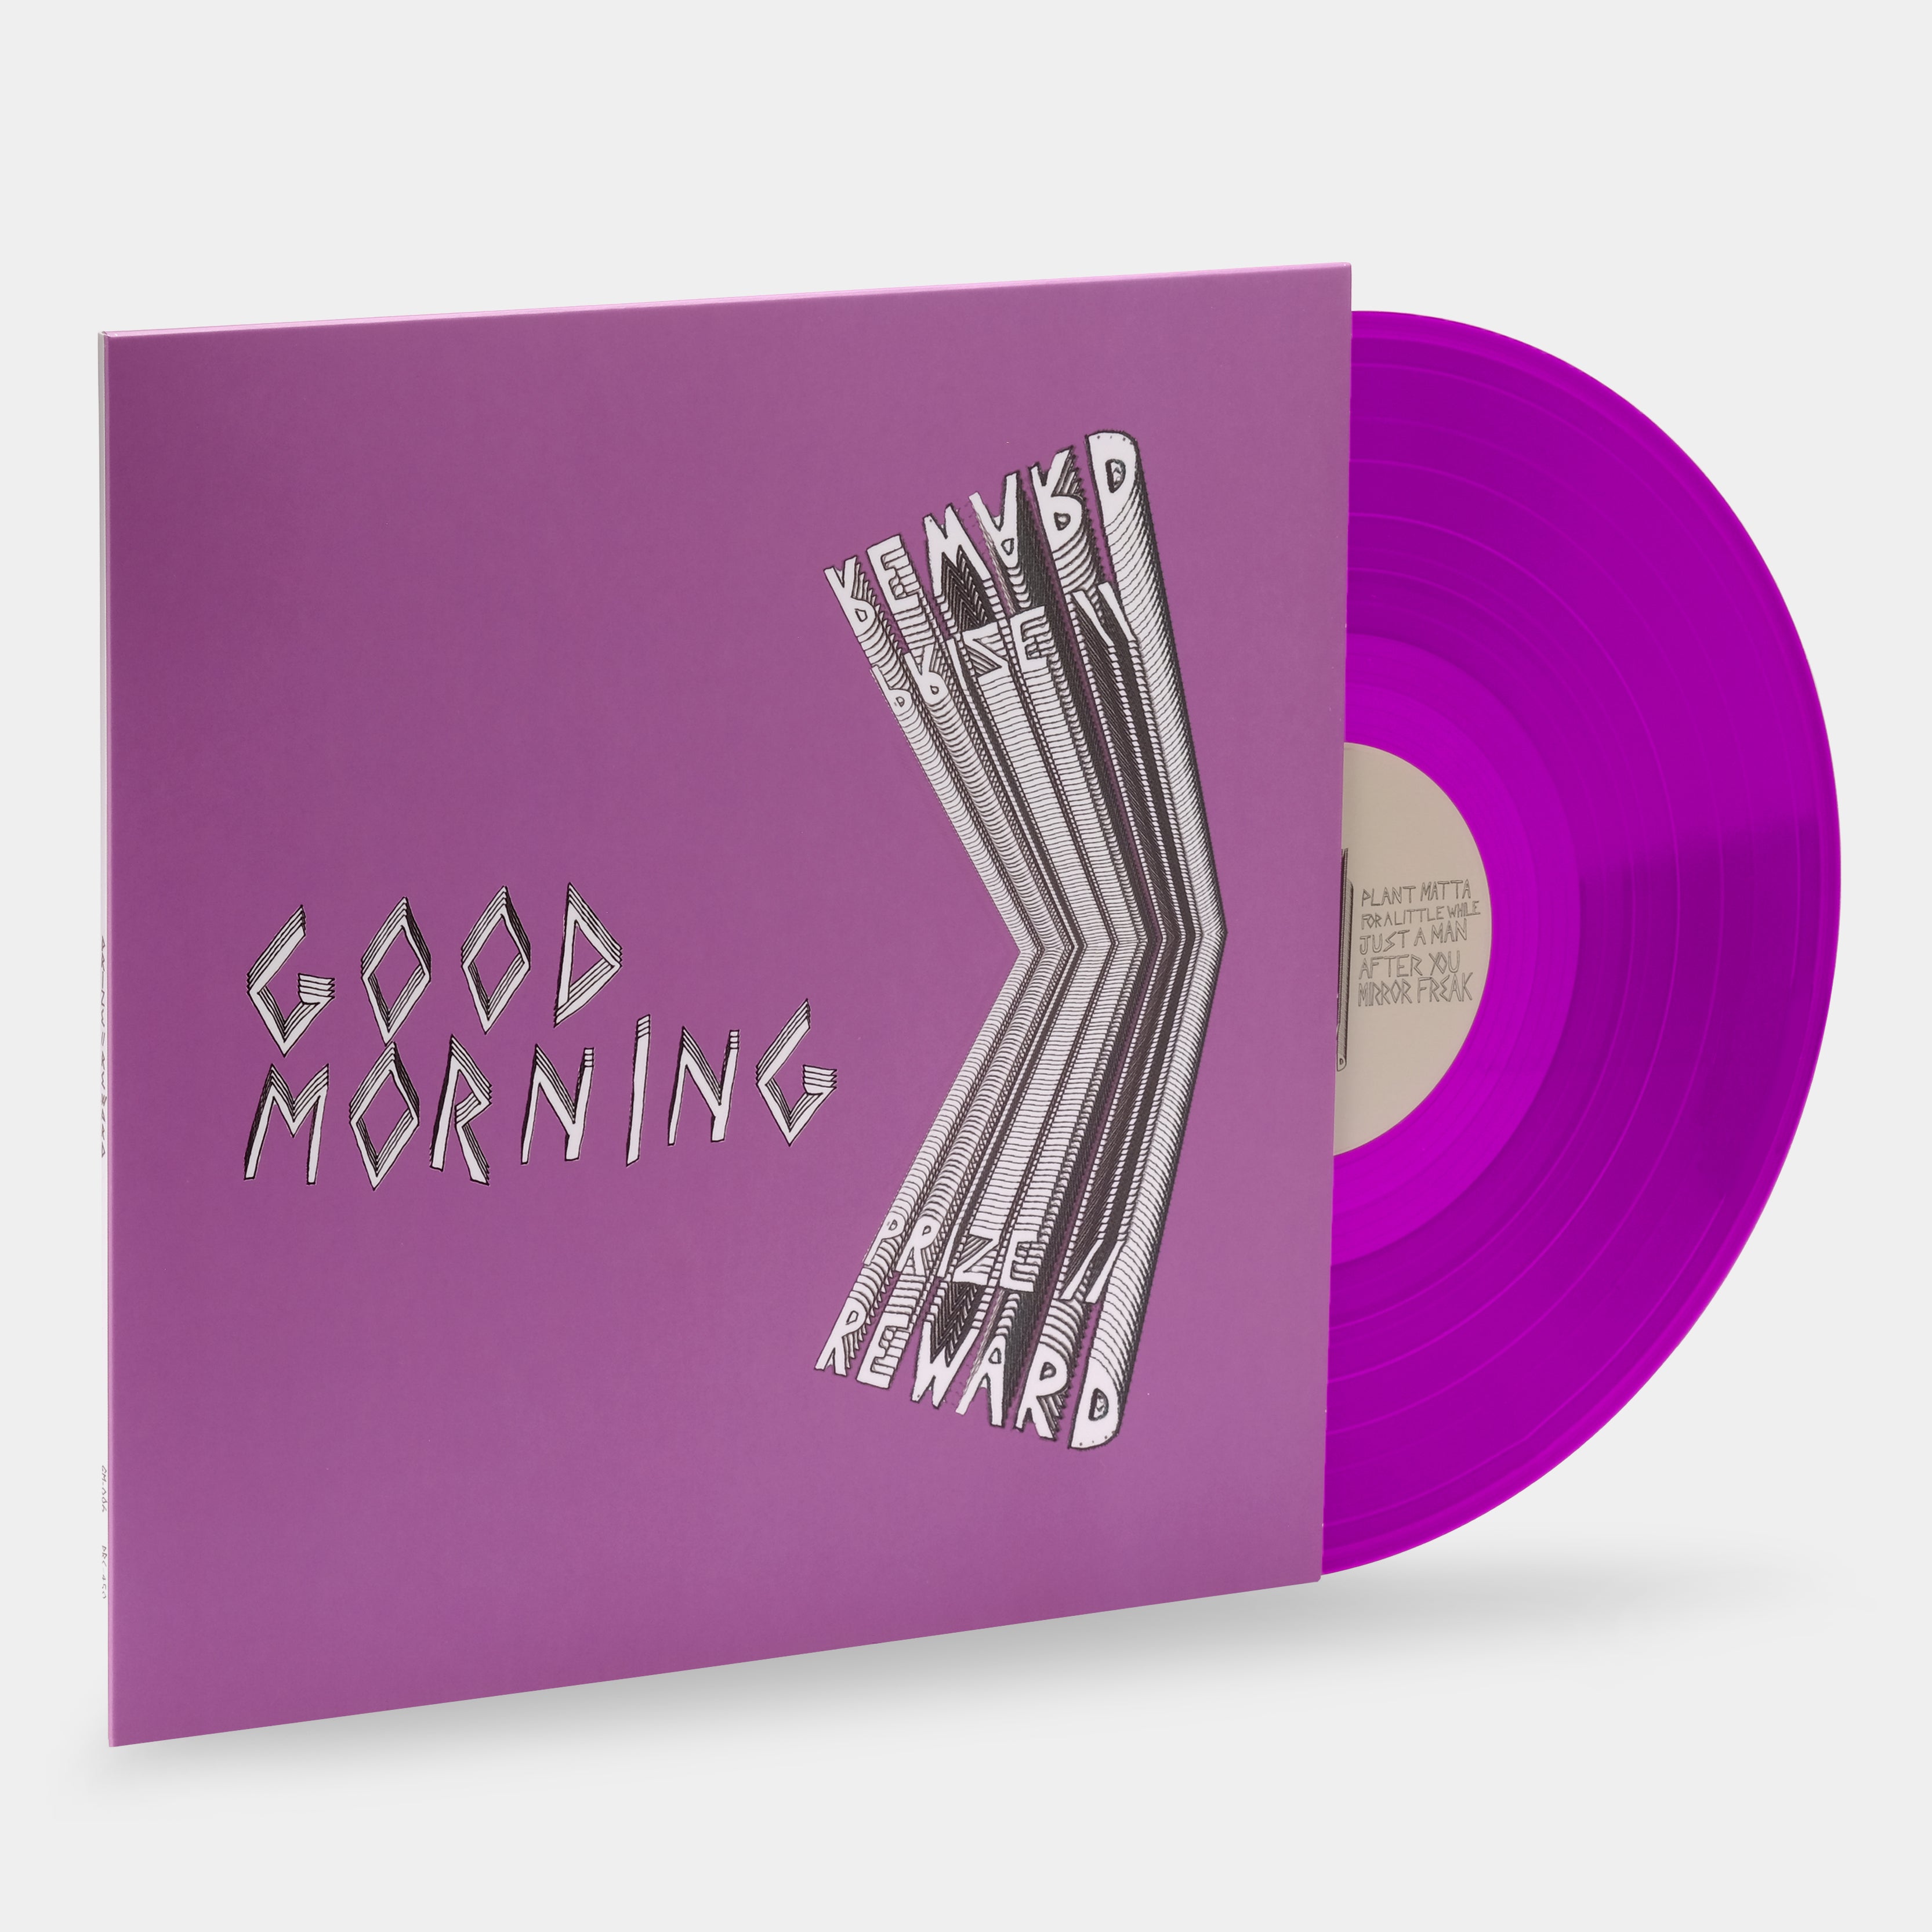 Good Morning - Prize // Reward LP Neon Purple Vinyl Record